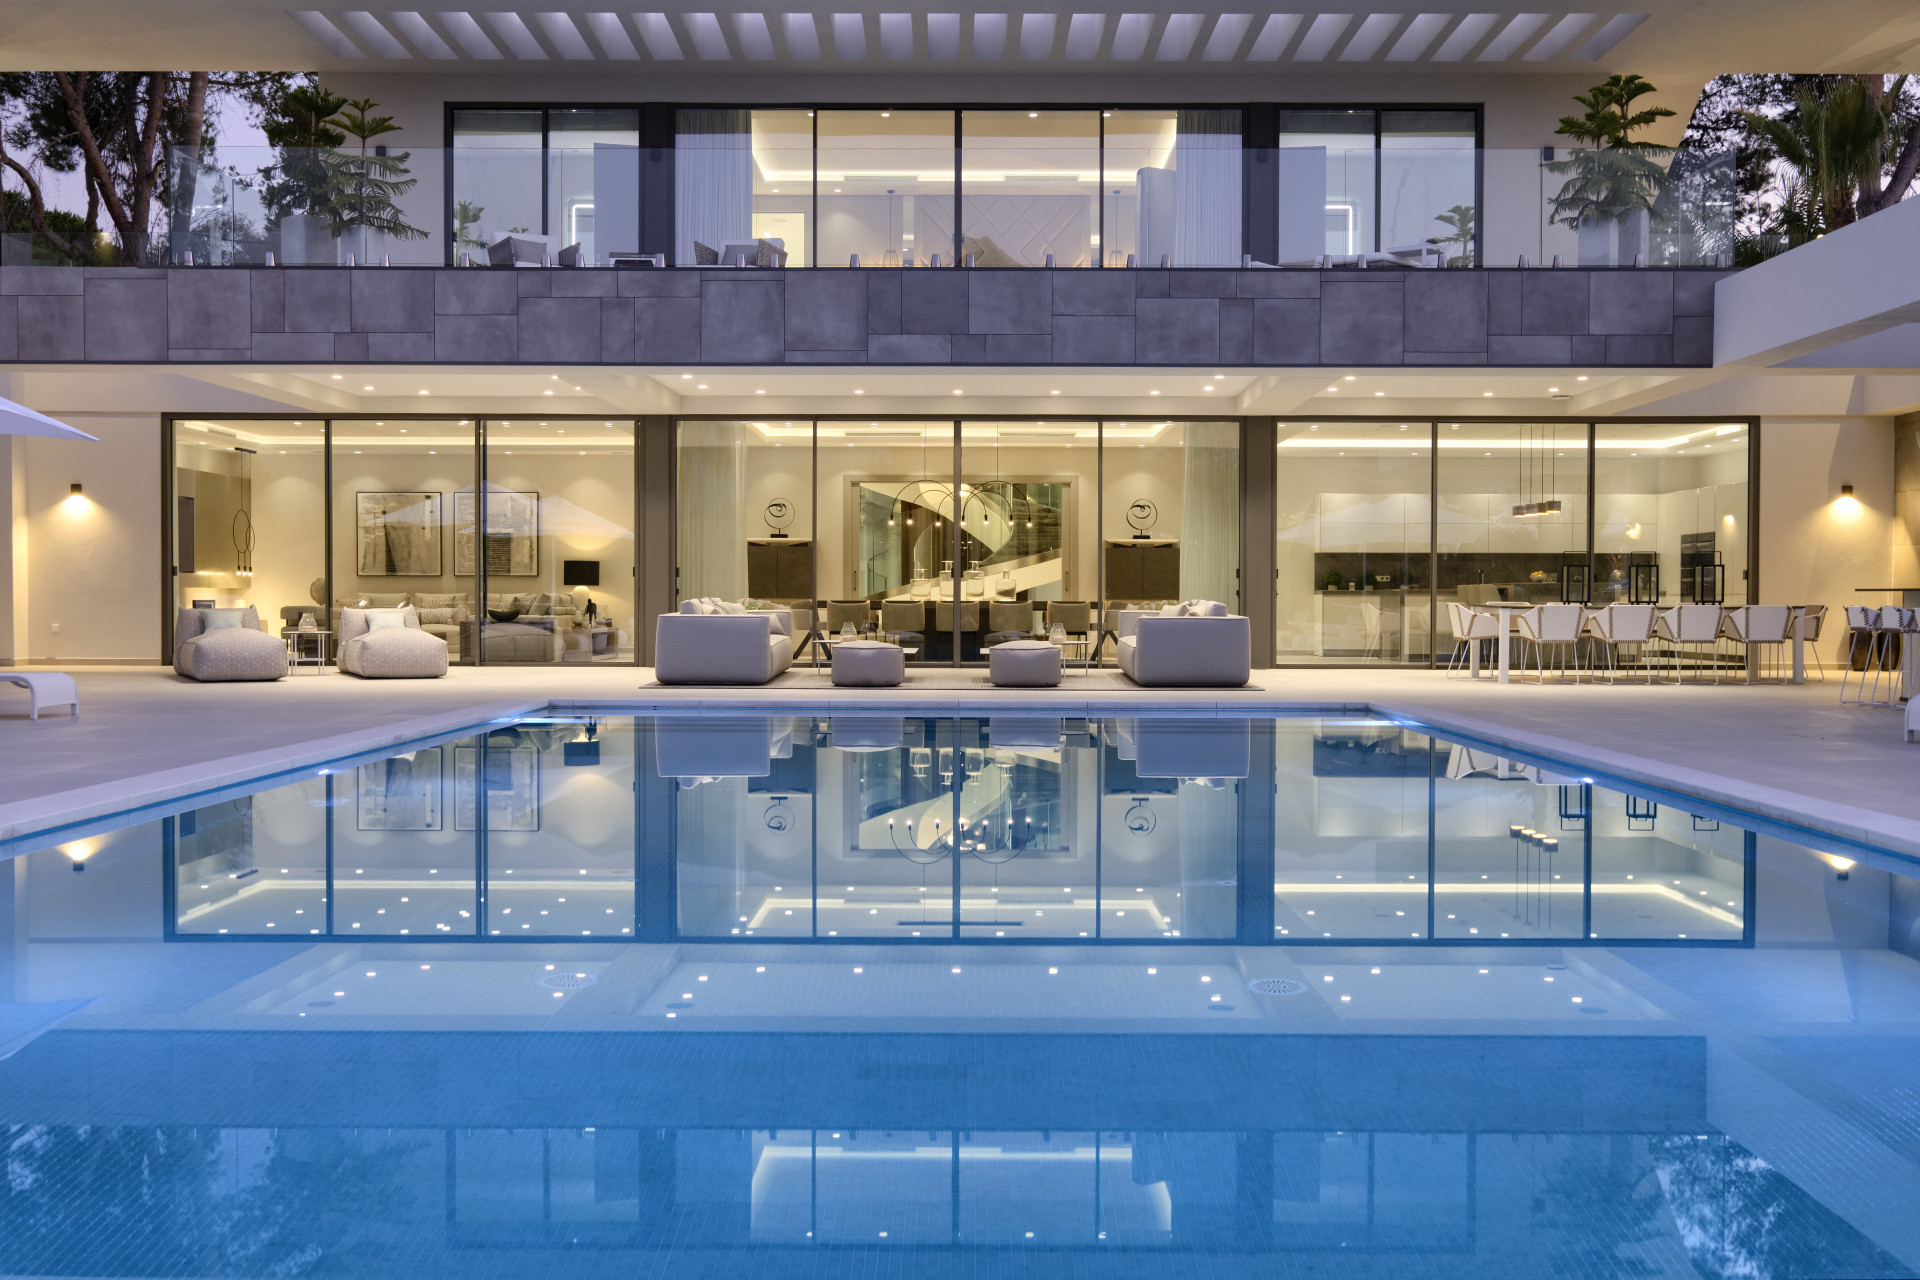 Modern style front line golf luxury mansion for sale in Las Brisas - Nueva Andalucía – Marbella